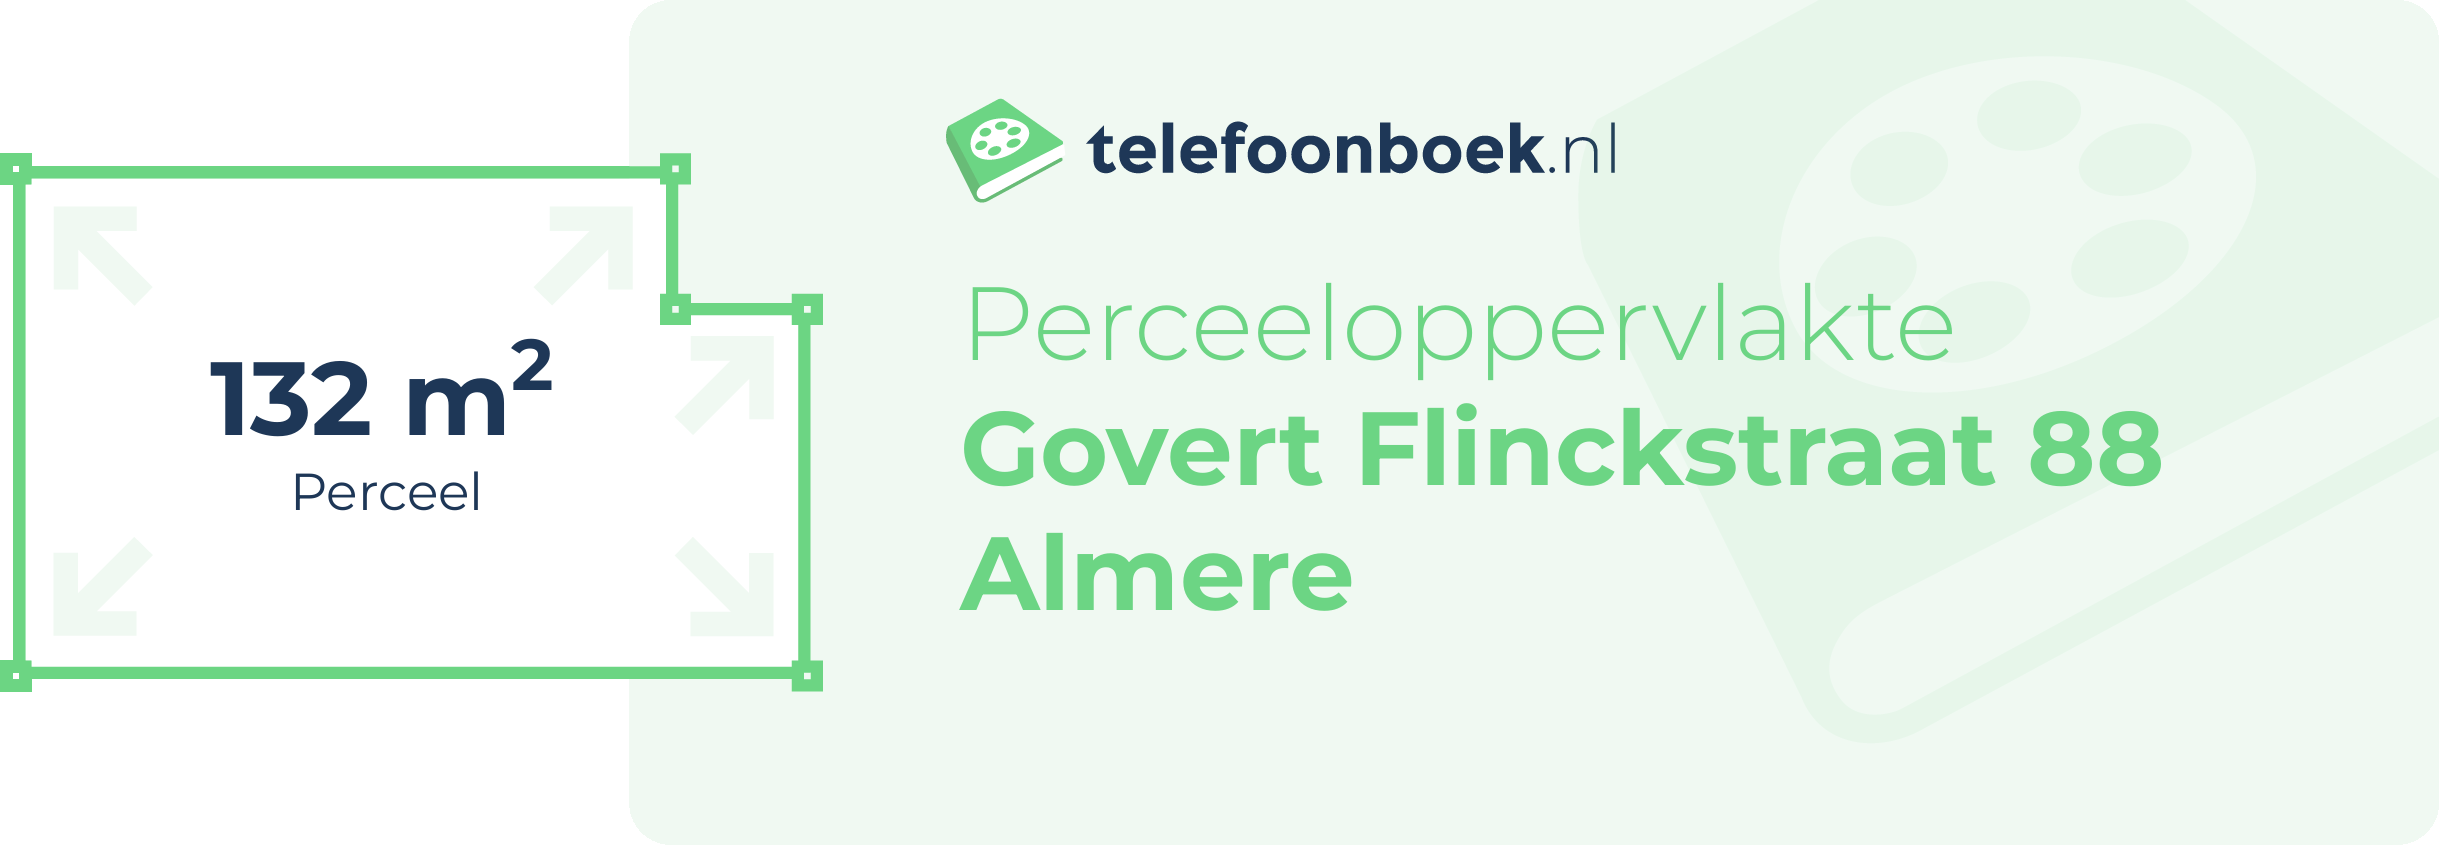 Perceeloppervlakte Govert Flinckstraat 88 Almere